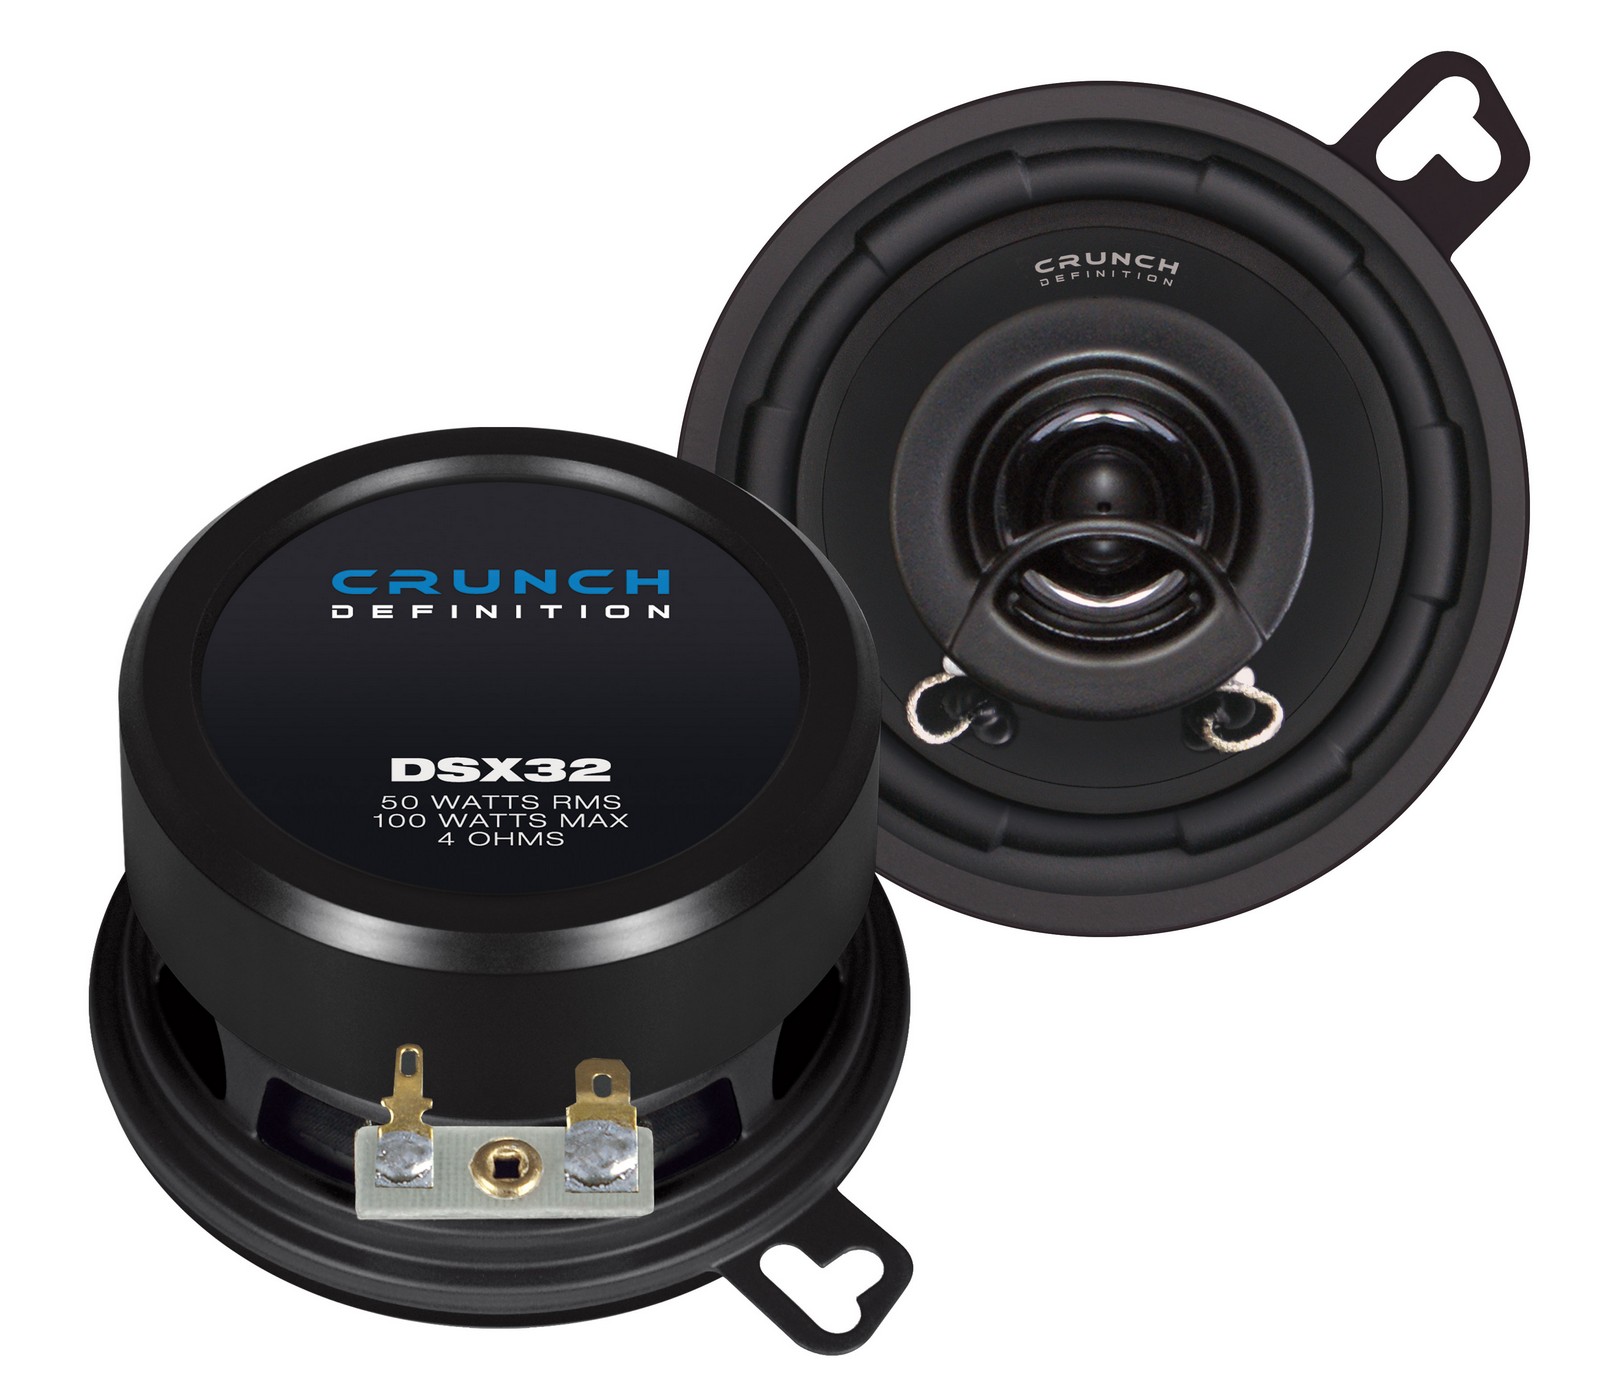 Crunch DSX32 2-Wege Koaxial Lautsprecher 8,7 cm 100 Watt Power - 1 Paar